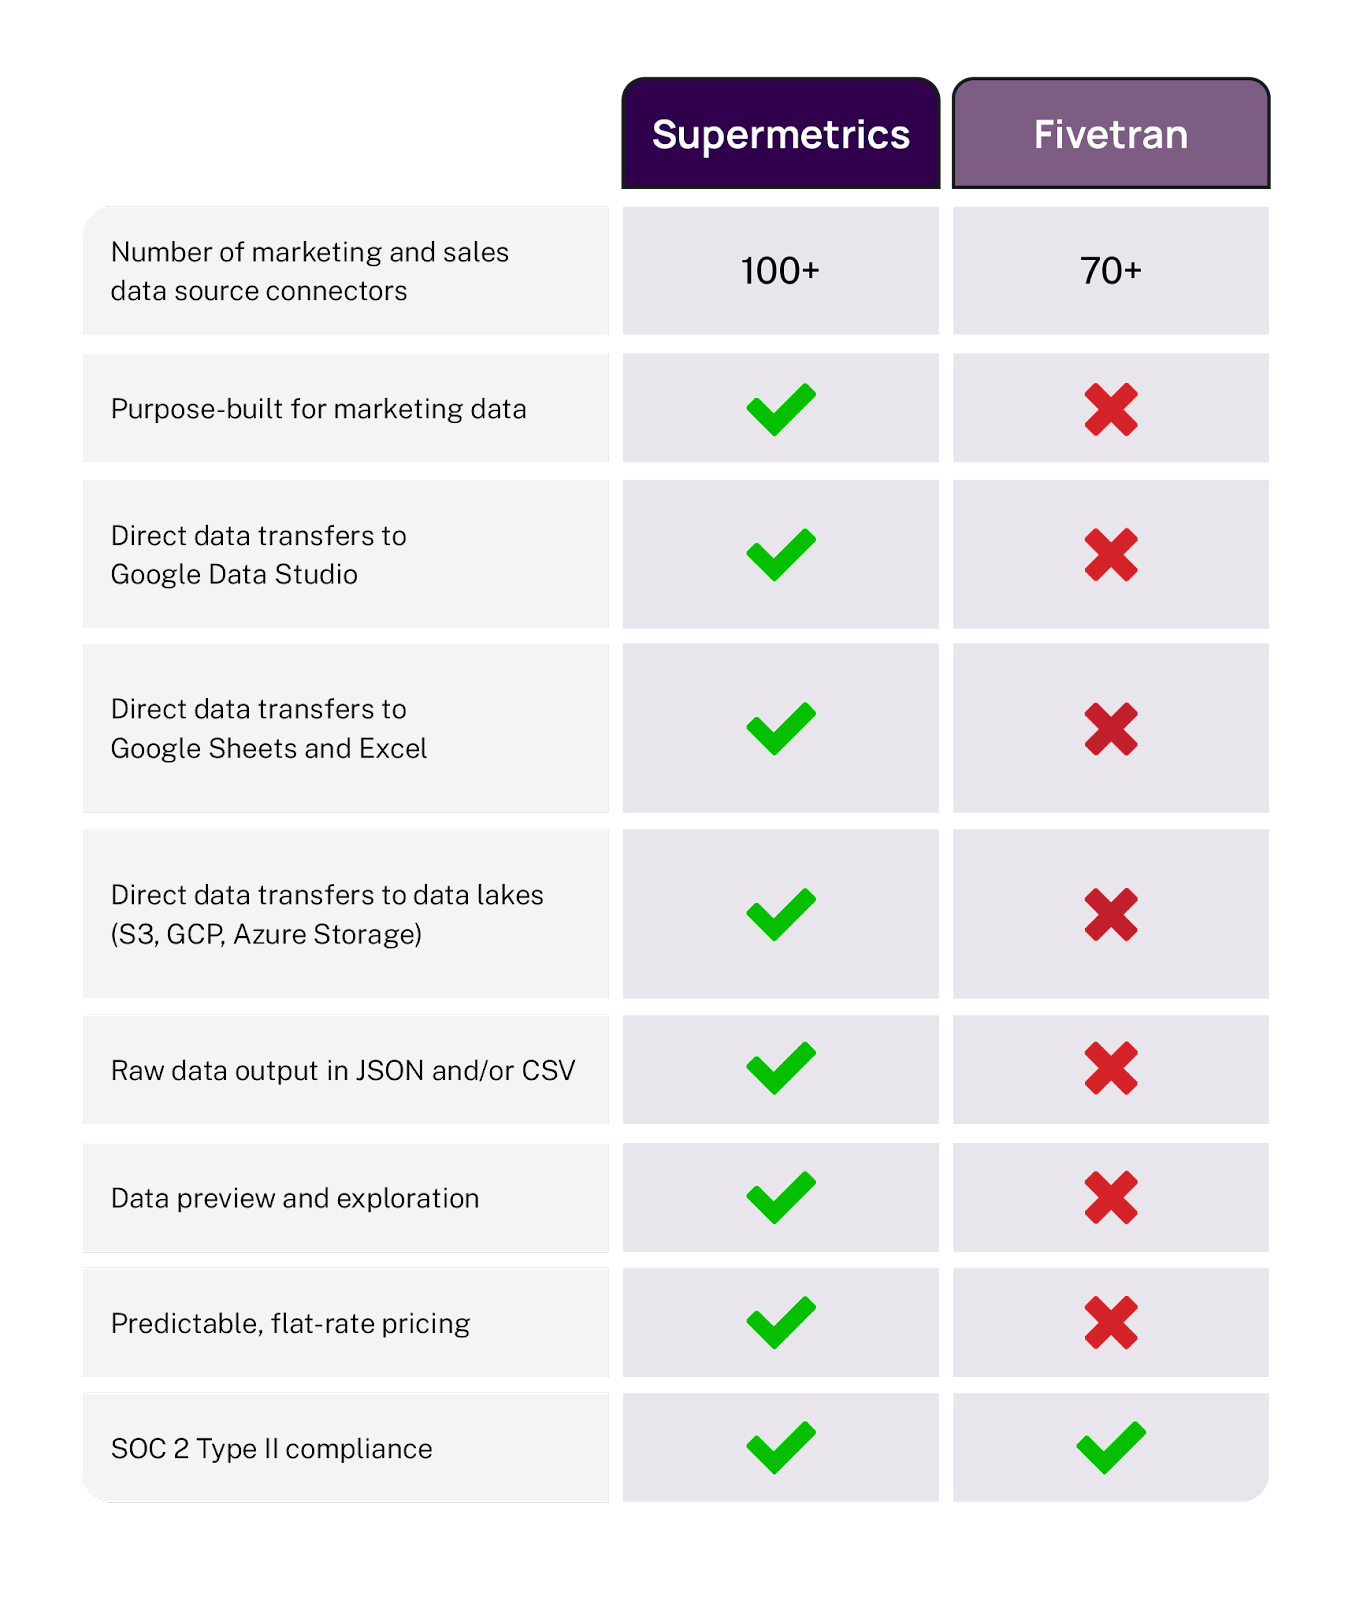 Feature comparison table between Supermetrics and Fivetran